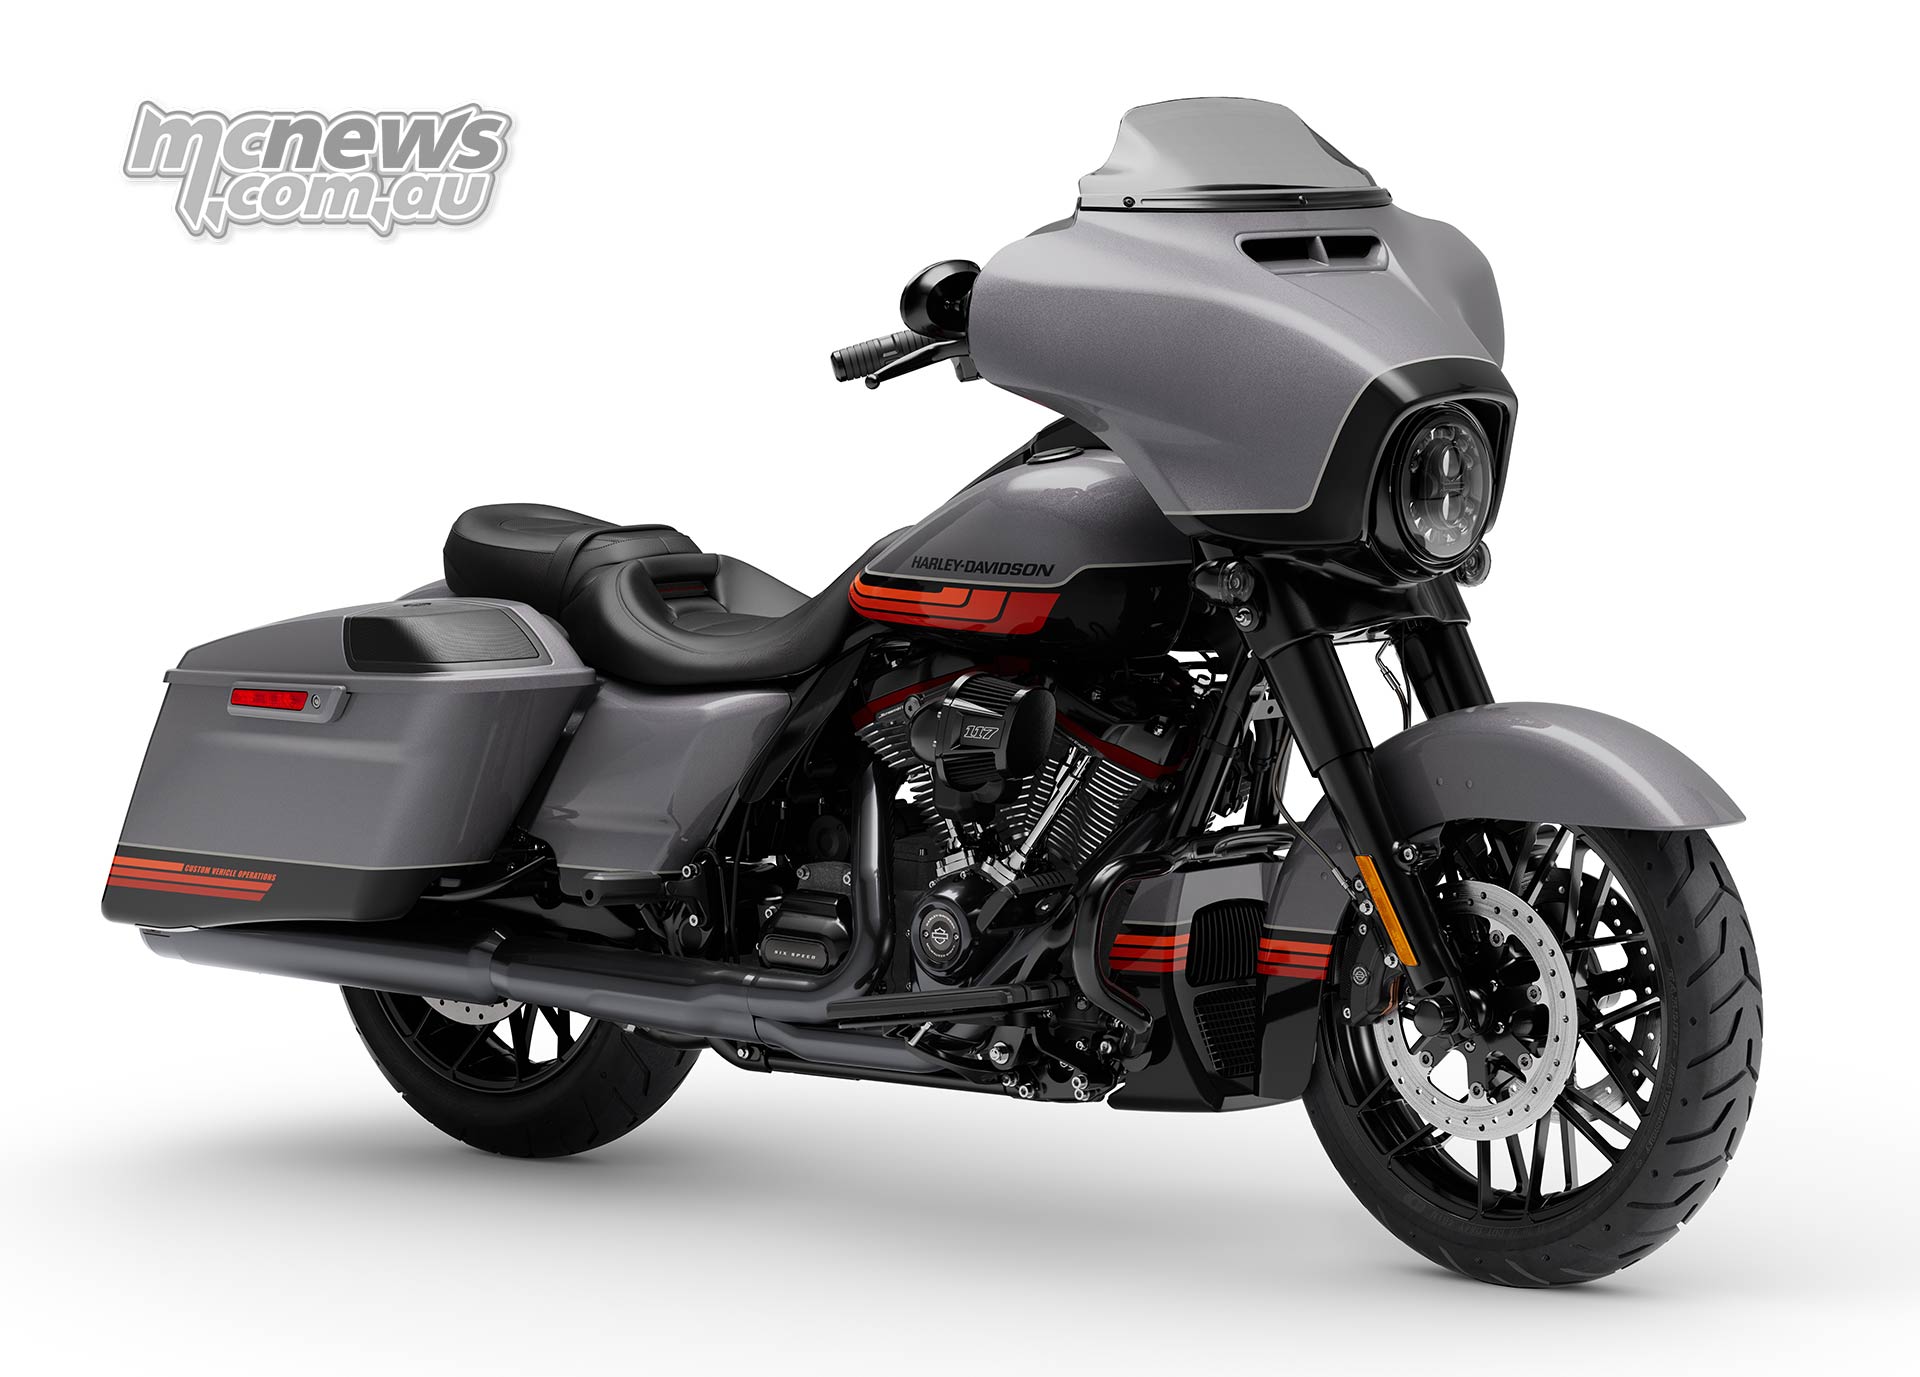 2020 Harley Davidson Cvo Street Glide Flhxse Mcnews